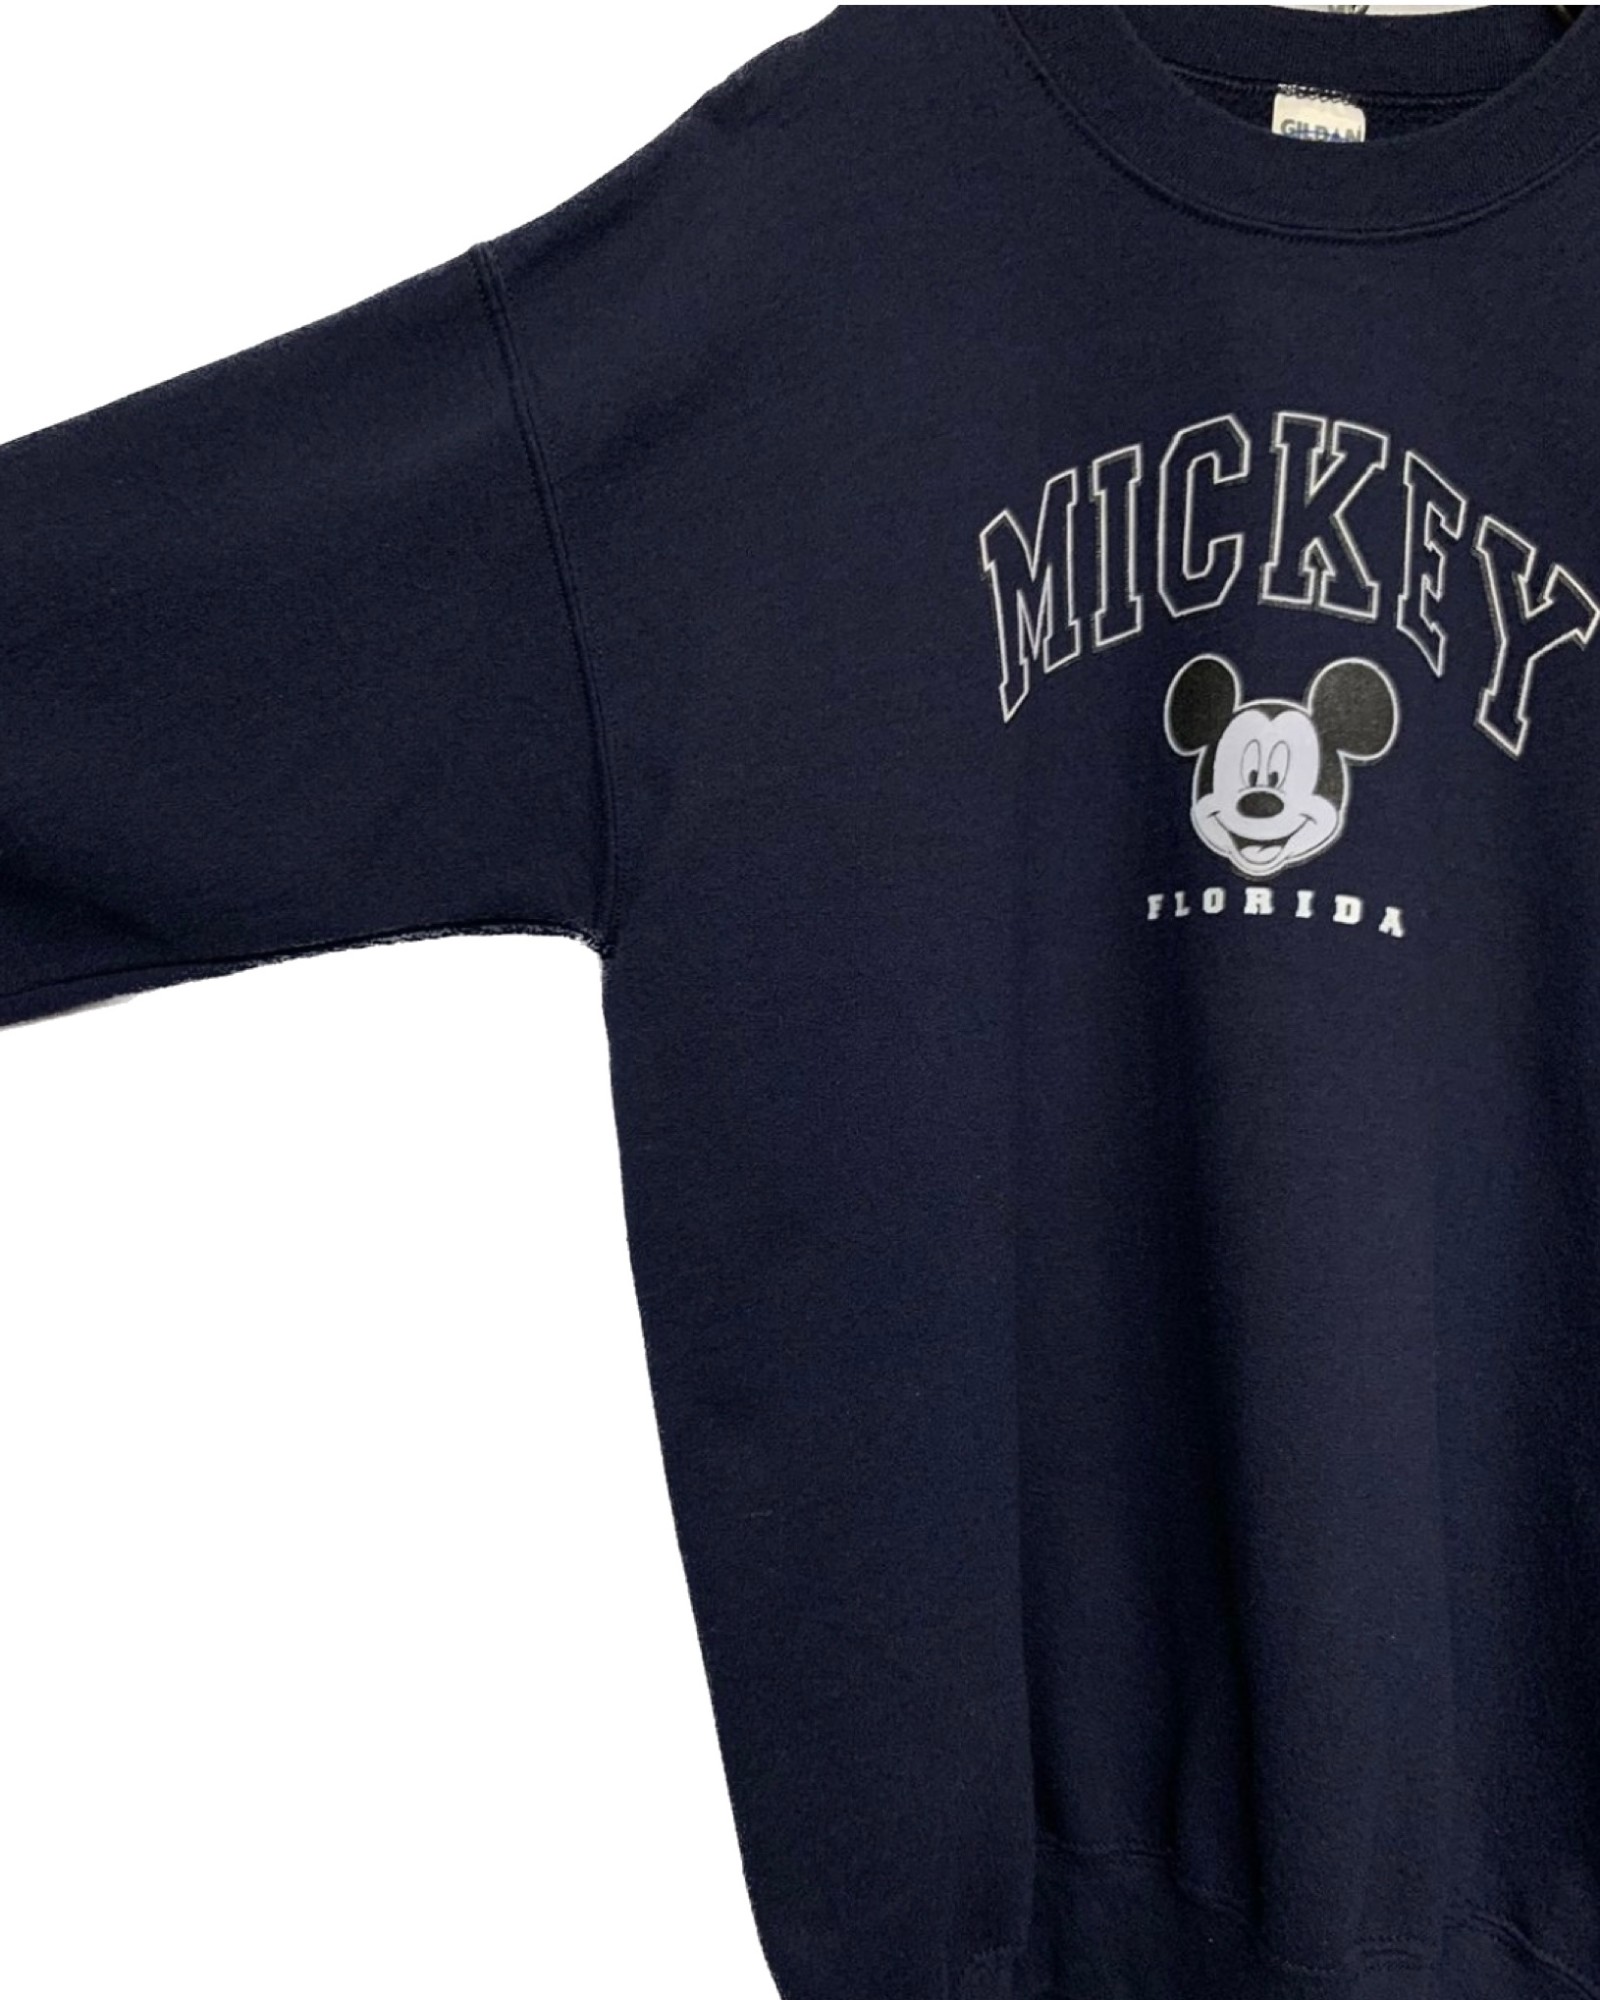 1990’s-2000’s “Mickey” Print Sweat Shirt